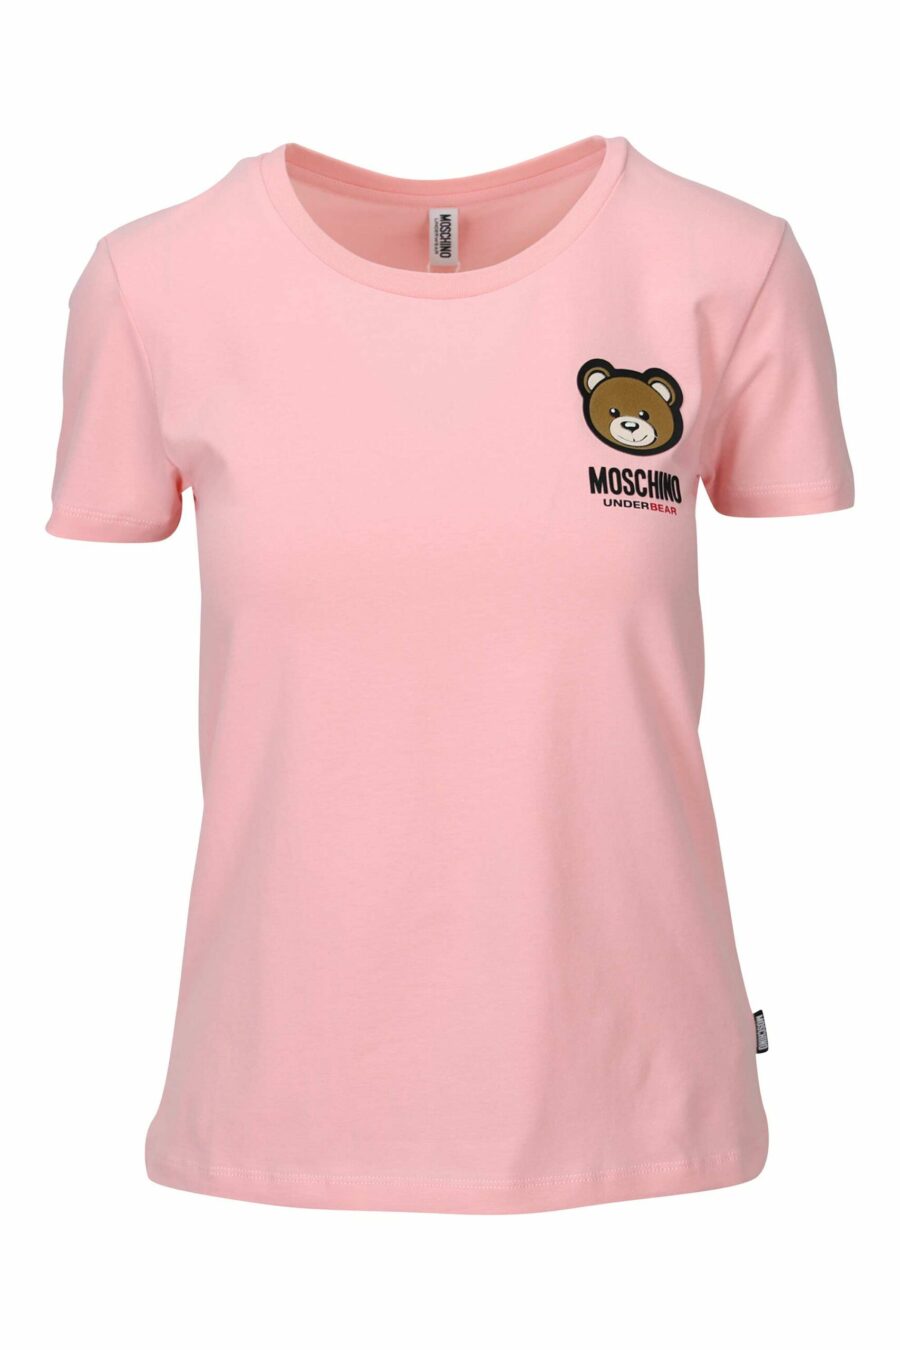 Camiseta rosa con logo parche oso "underbear" - 667113034546 scaled